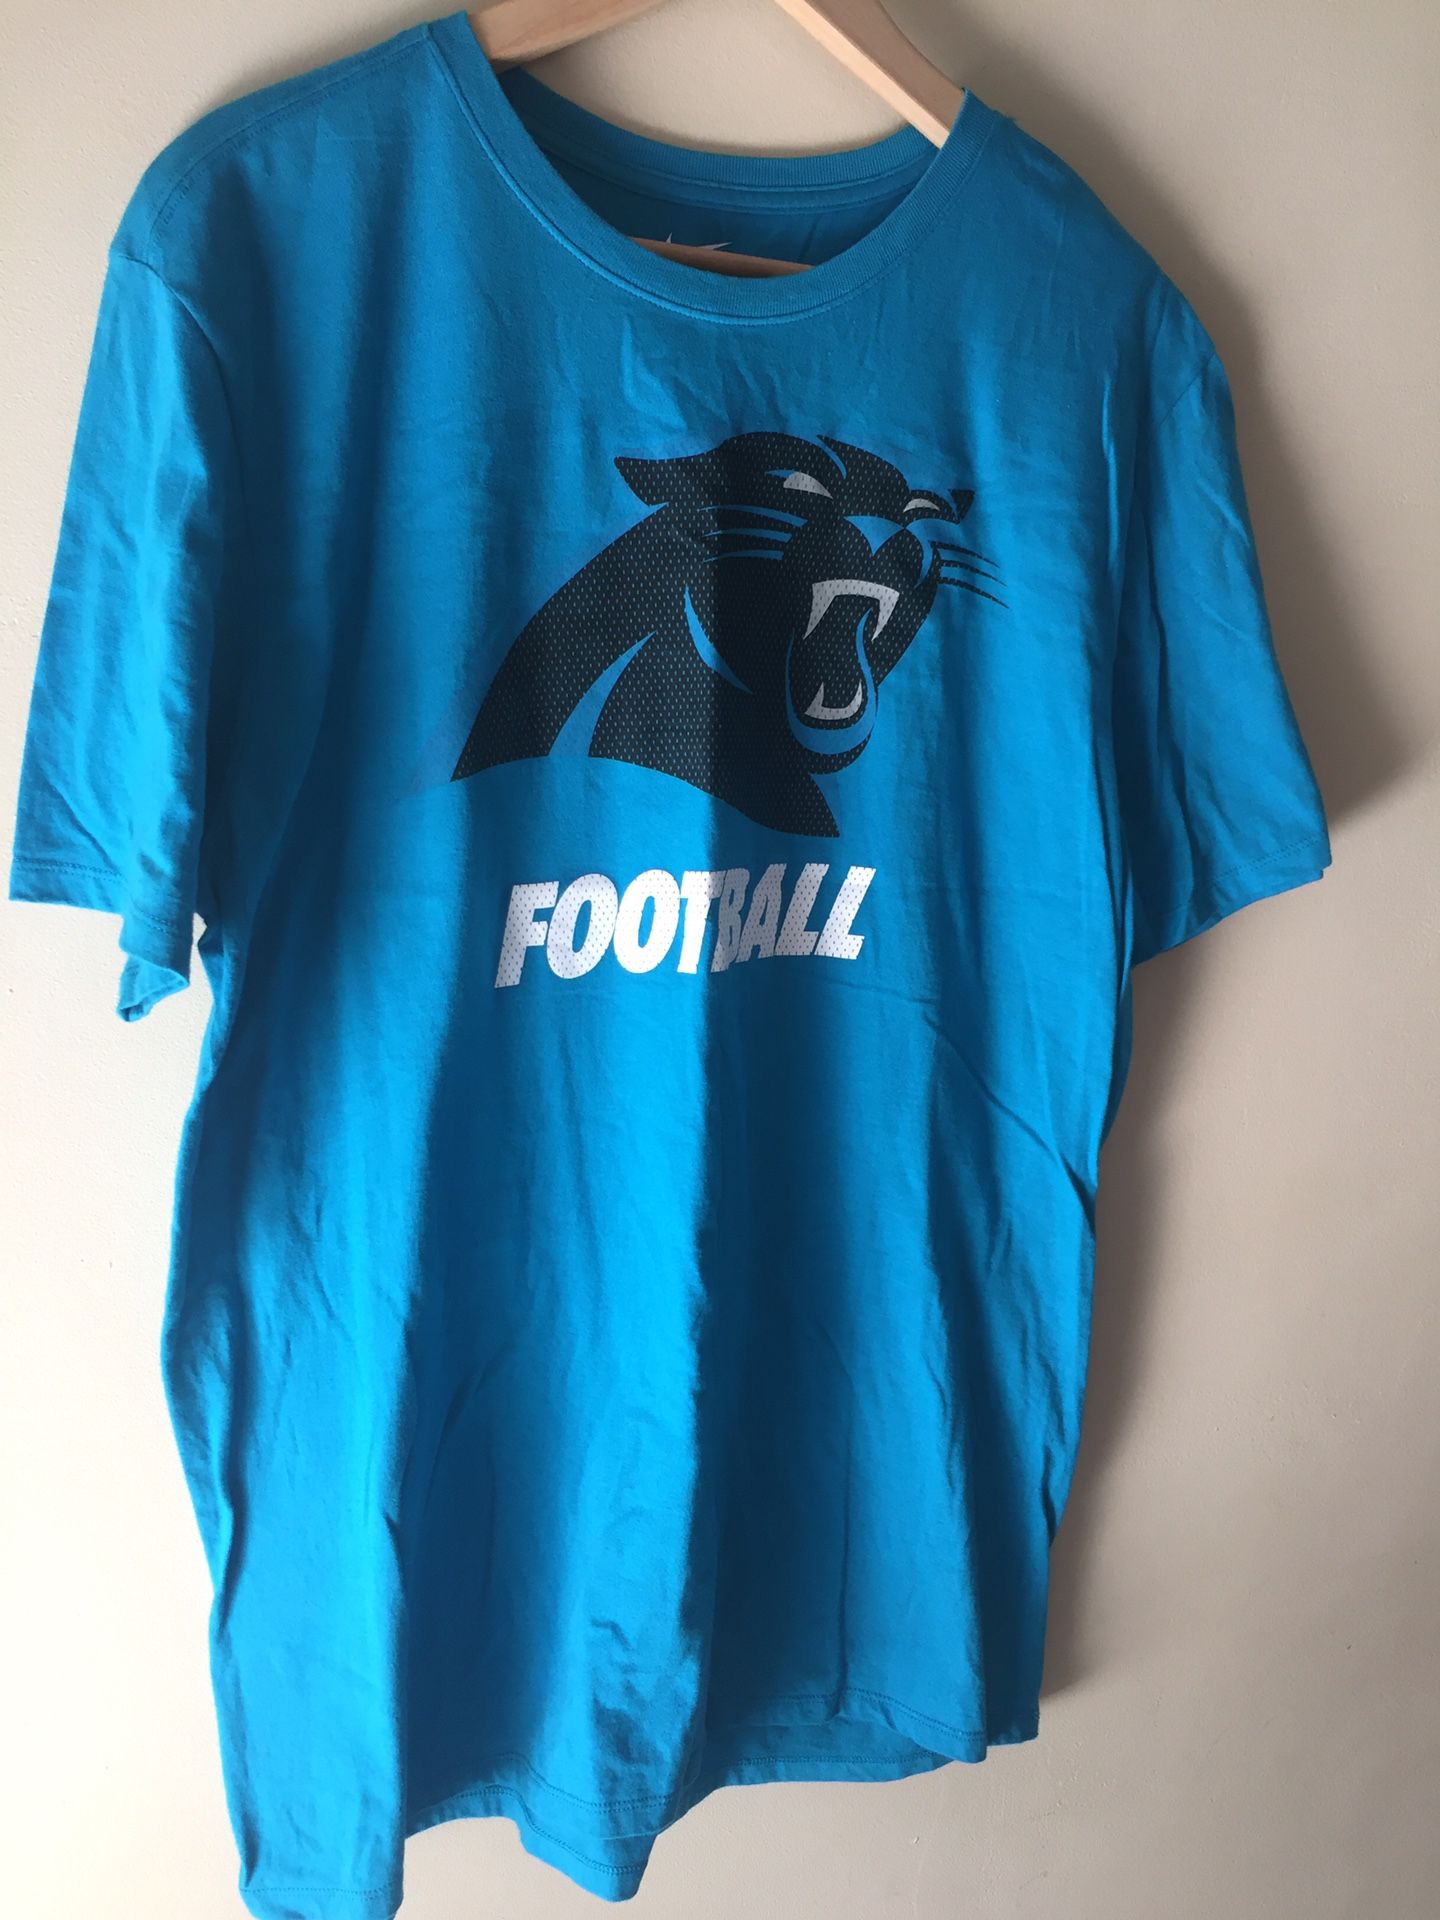 Men’s Nike NFL Equipment Carolina Panther XL Shirt